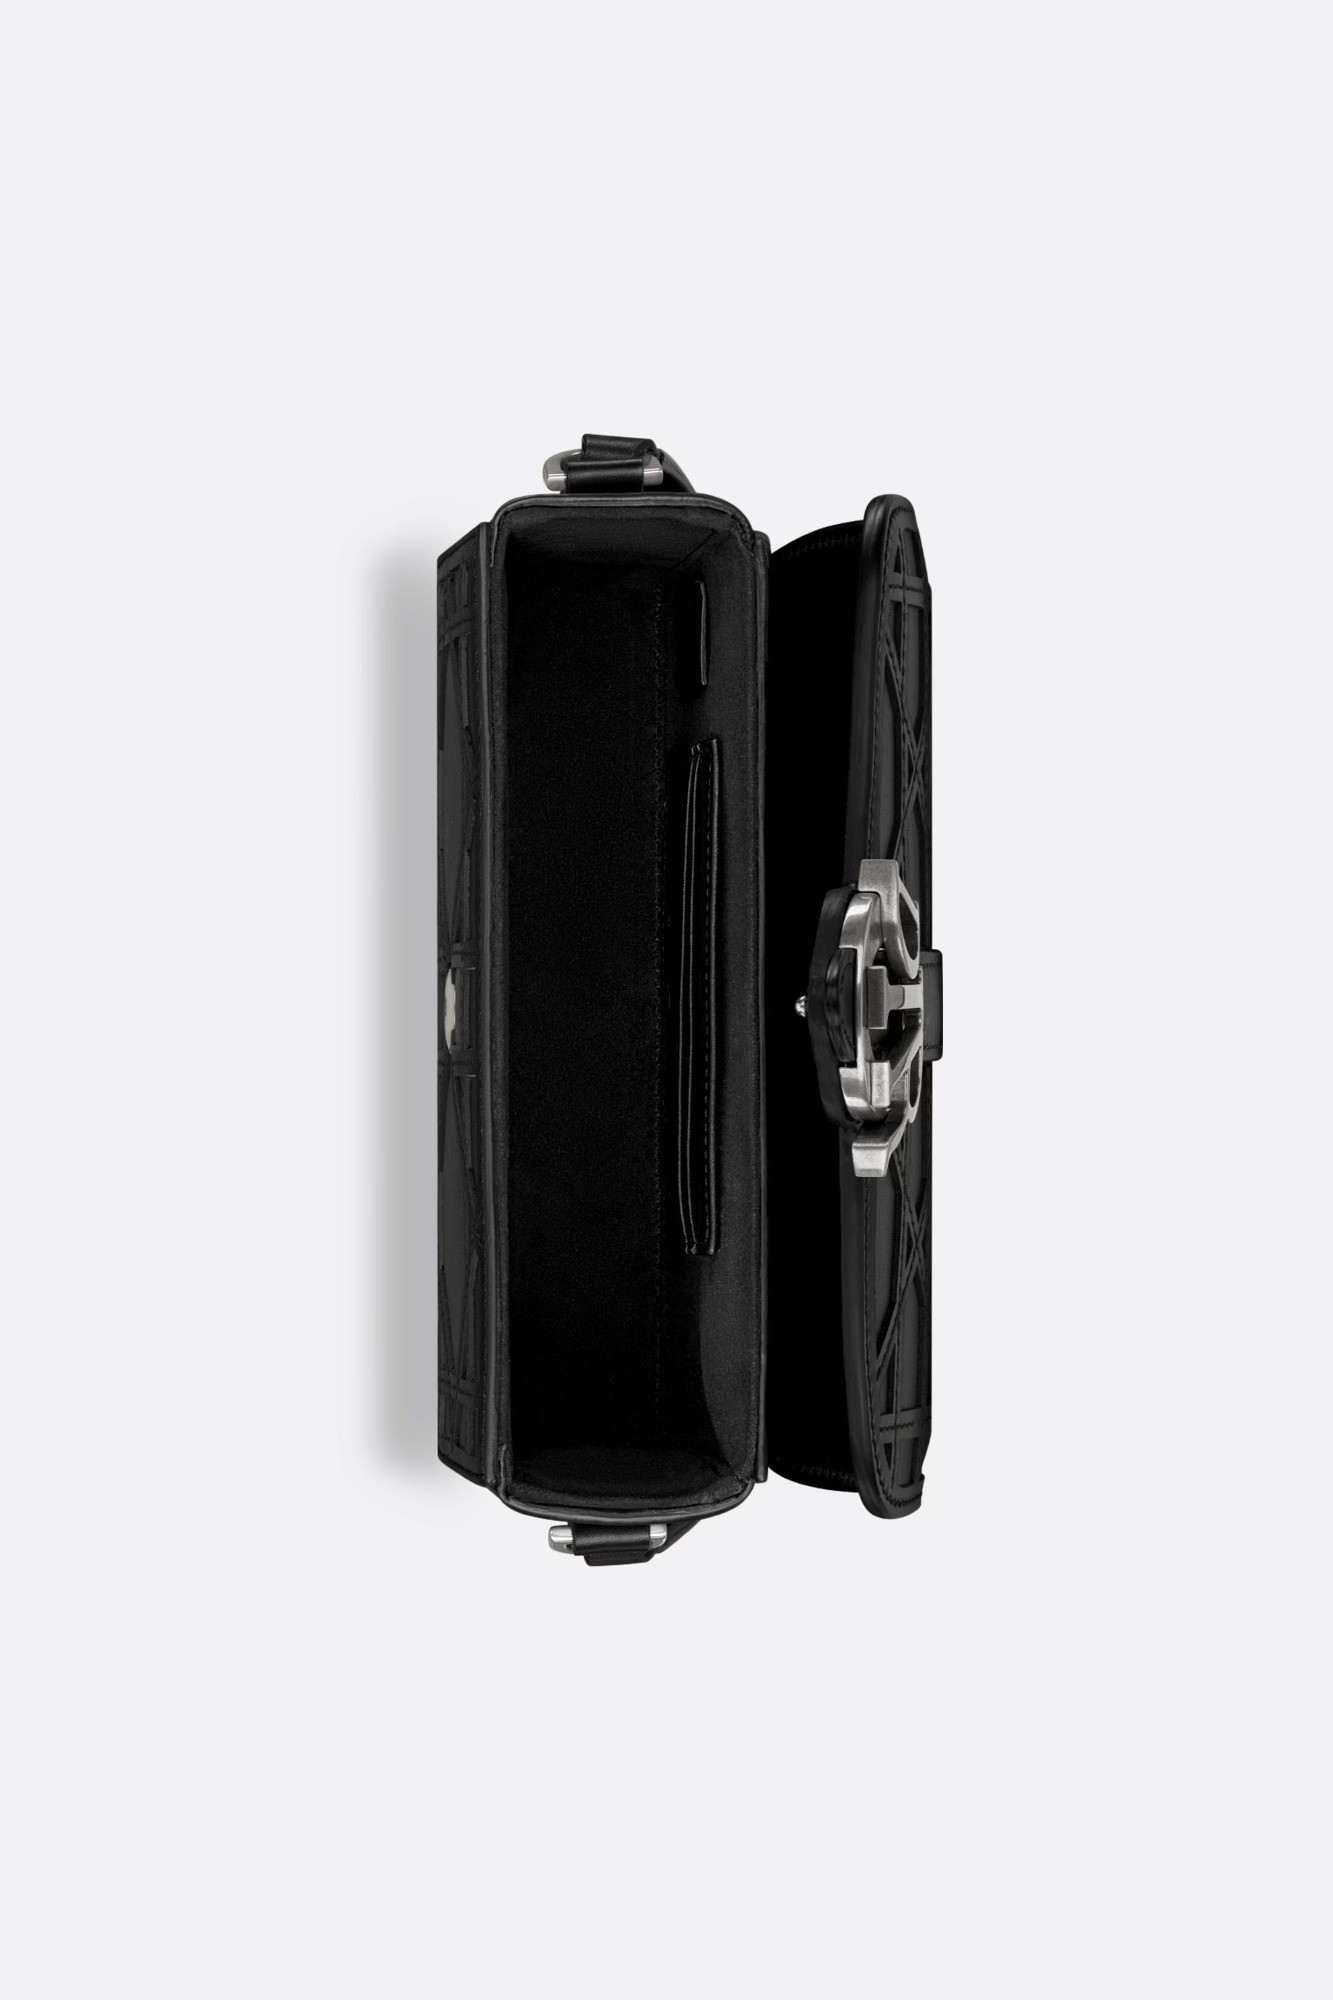 Mini Dior Charm Bag - Black